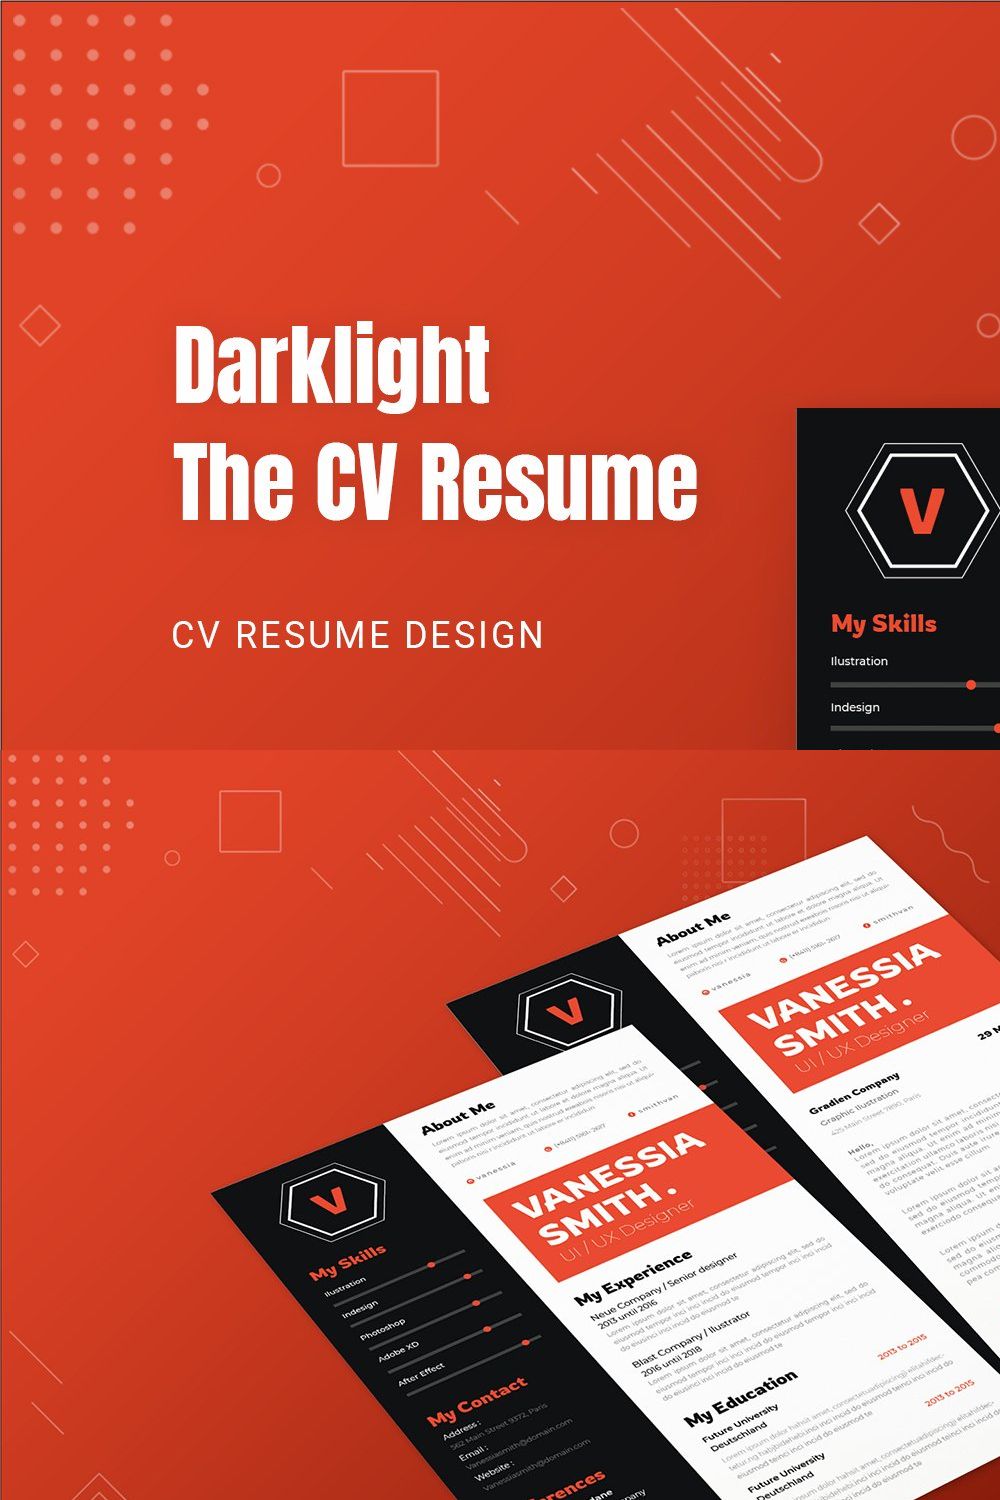 Darklight CV Resume pinterest preview image.